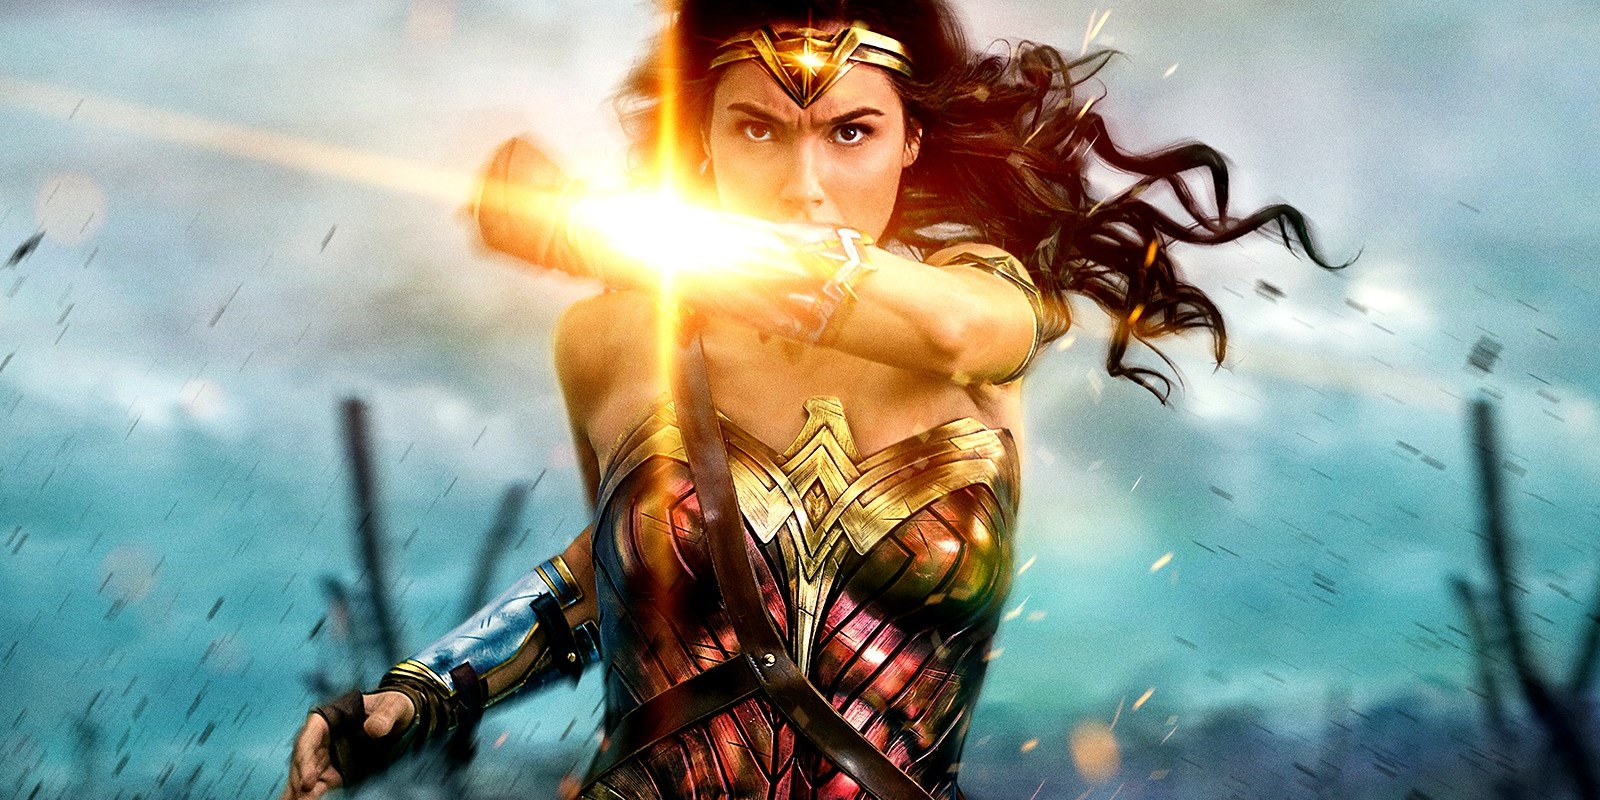 'Wonder Woman 2' has an official release date